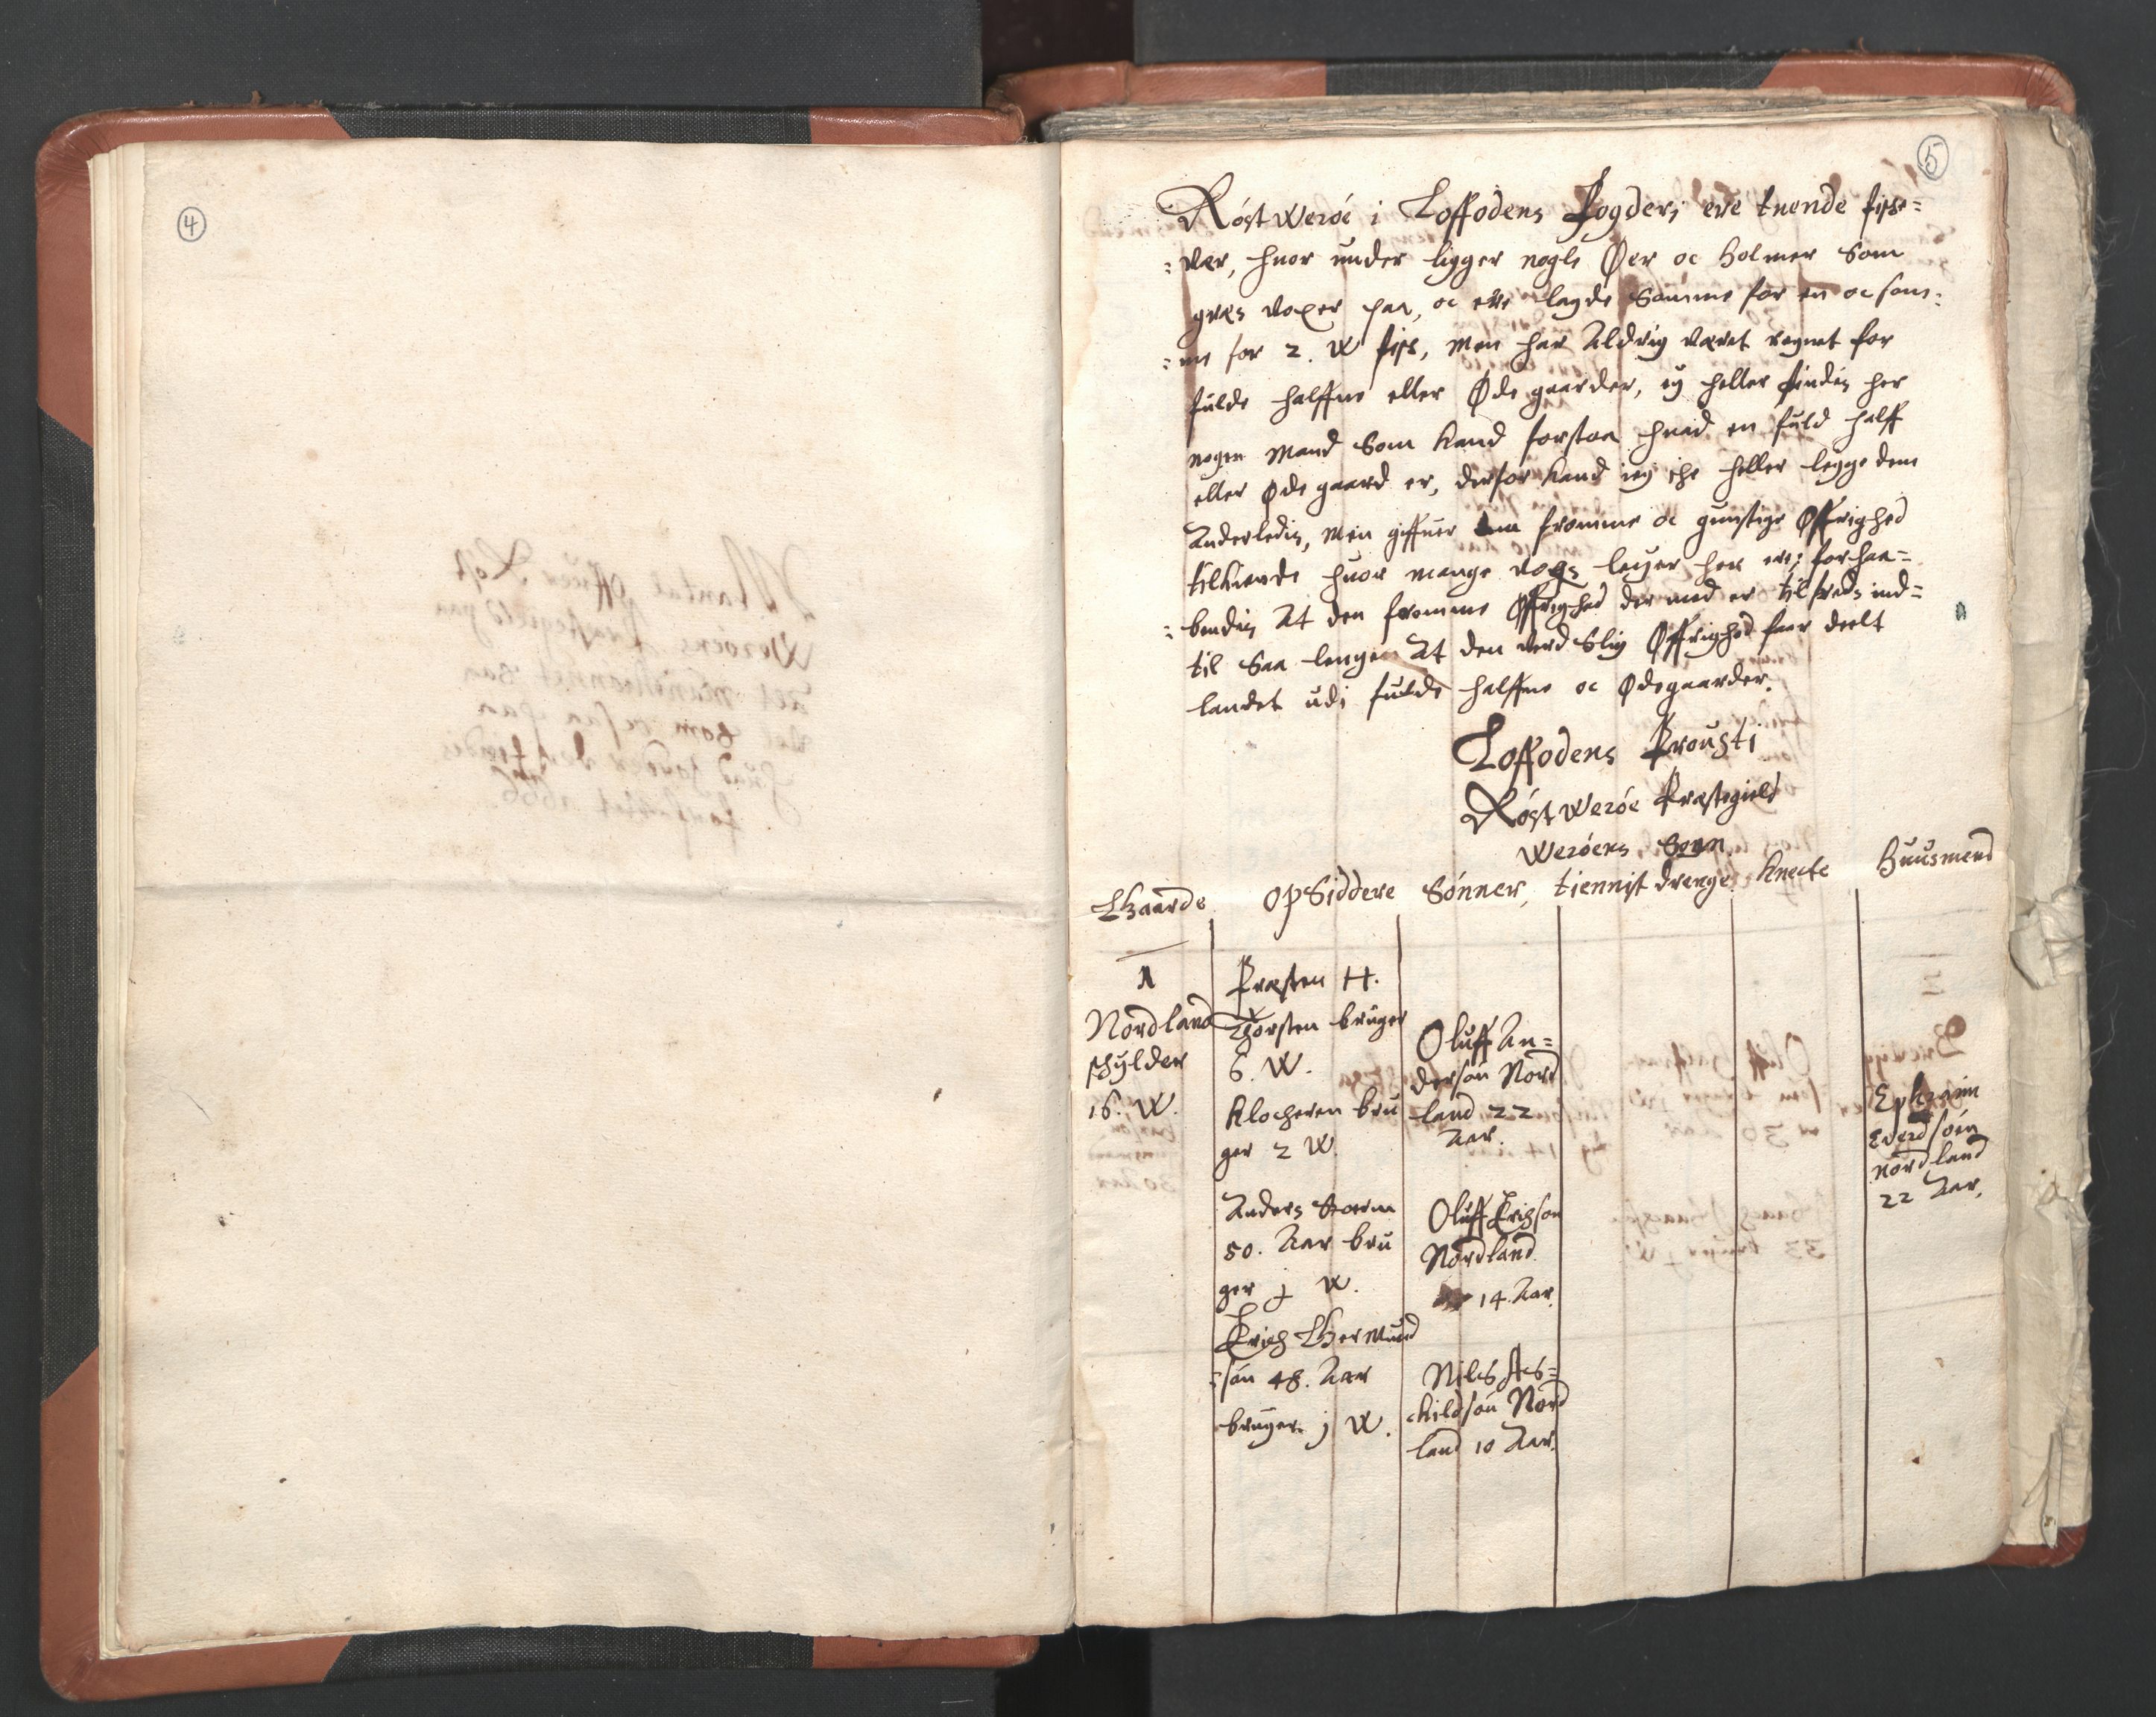 RA, Vicar's Census 1664-1666, no. 36: Lofoten and Vesterålen deanery, Senja deanery and Troms deanery, 1664-1666, p. 4-5